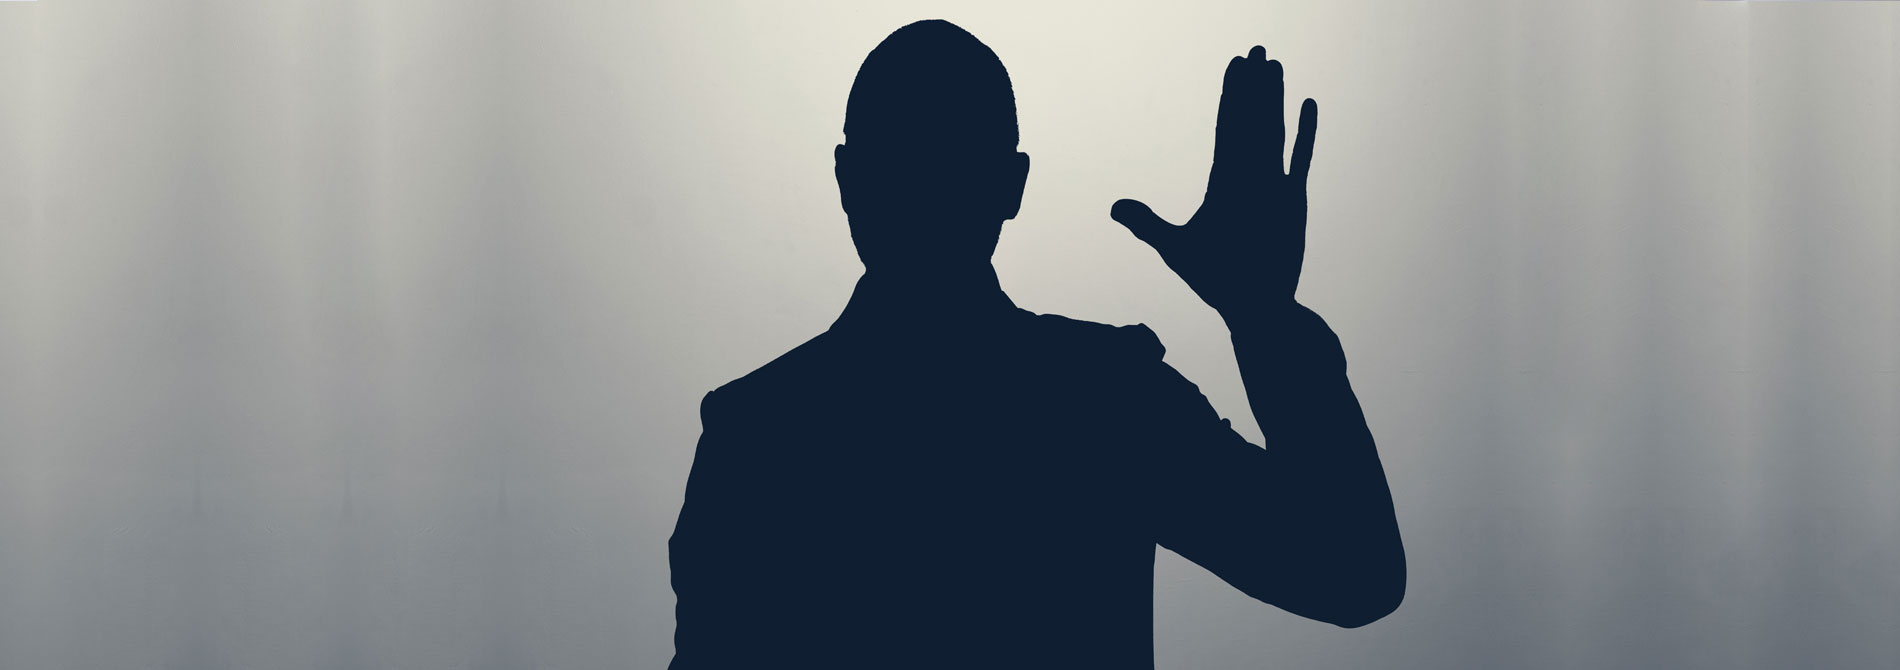 silhouette of man waving